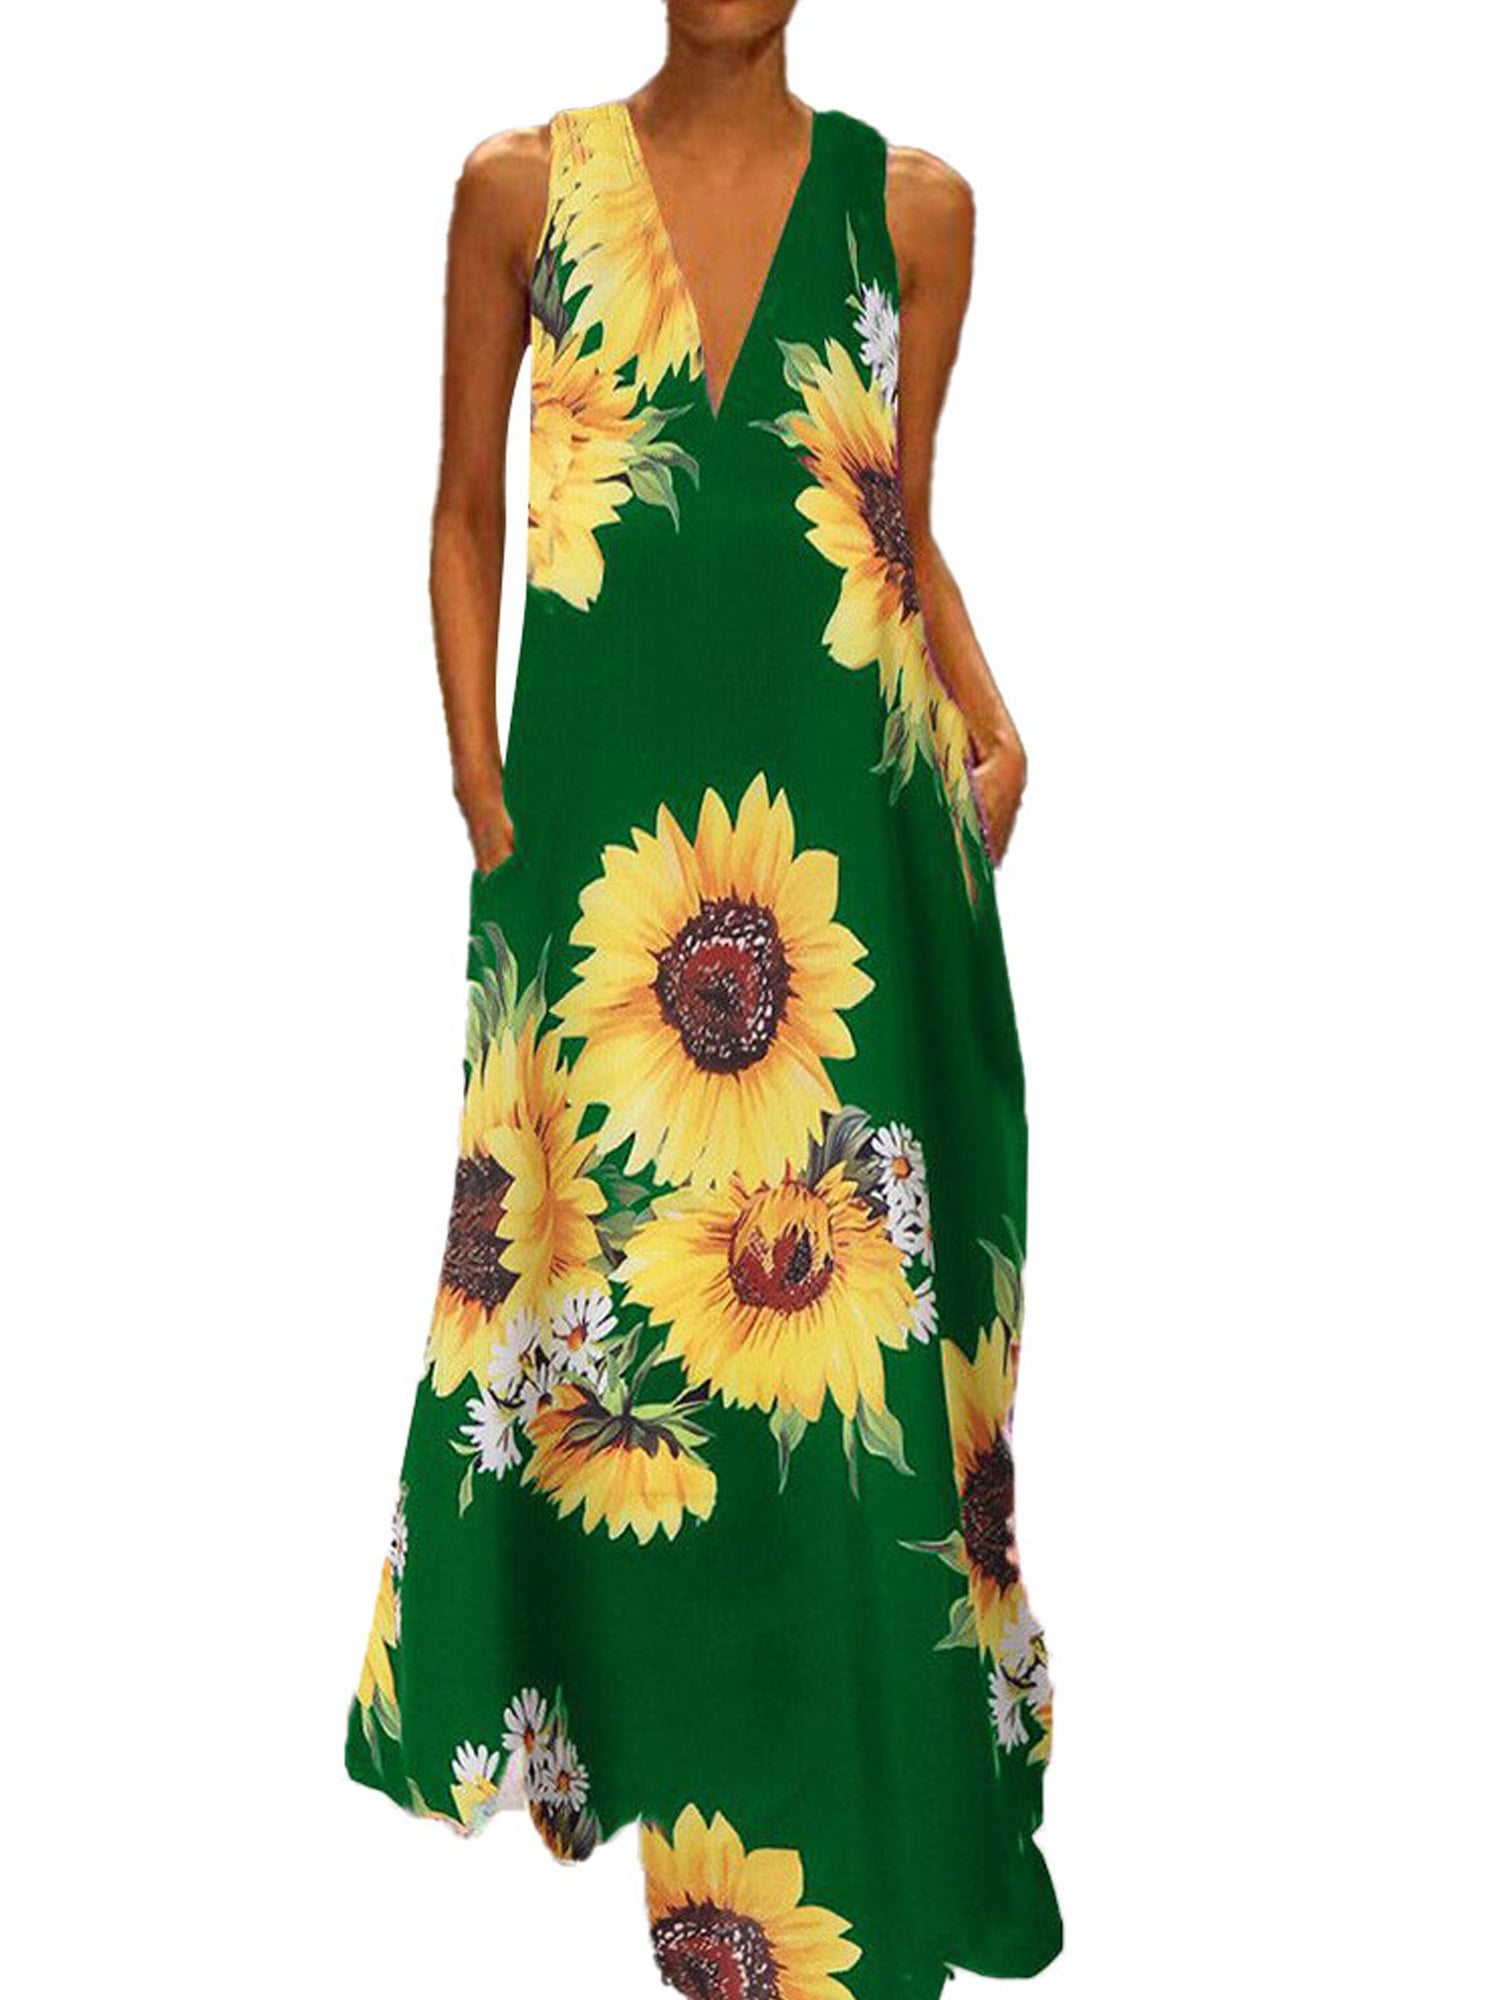 Summer Dress for Women Sunflower Floral Print Dress with Front Cross Tie Boho Beach Sundress Swing Dress with Blouse 